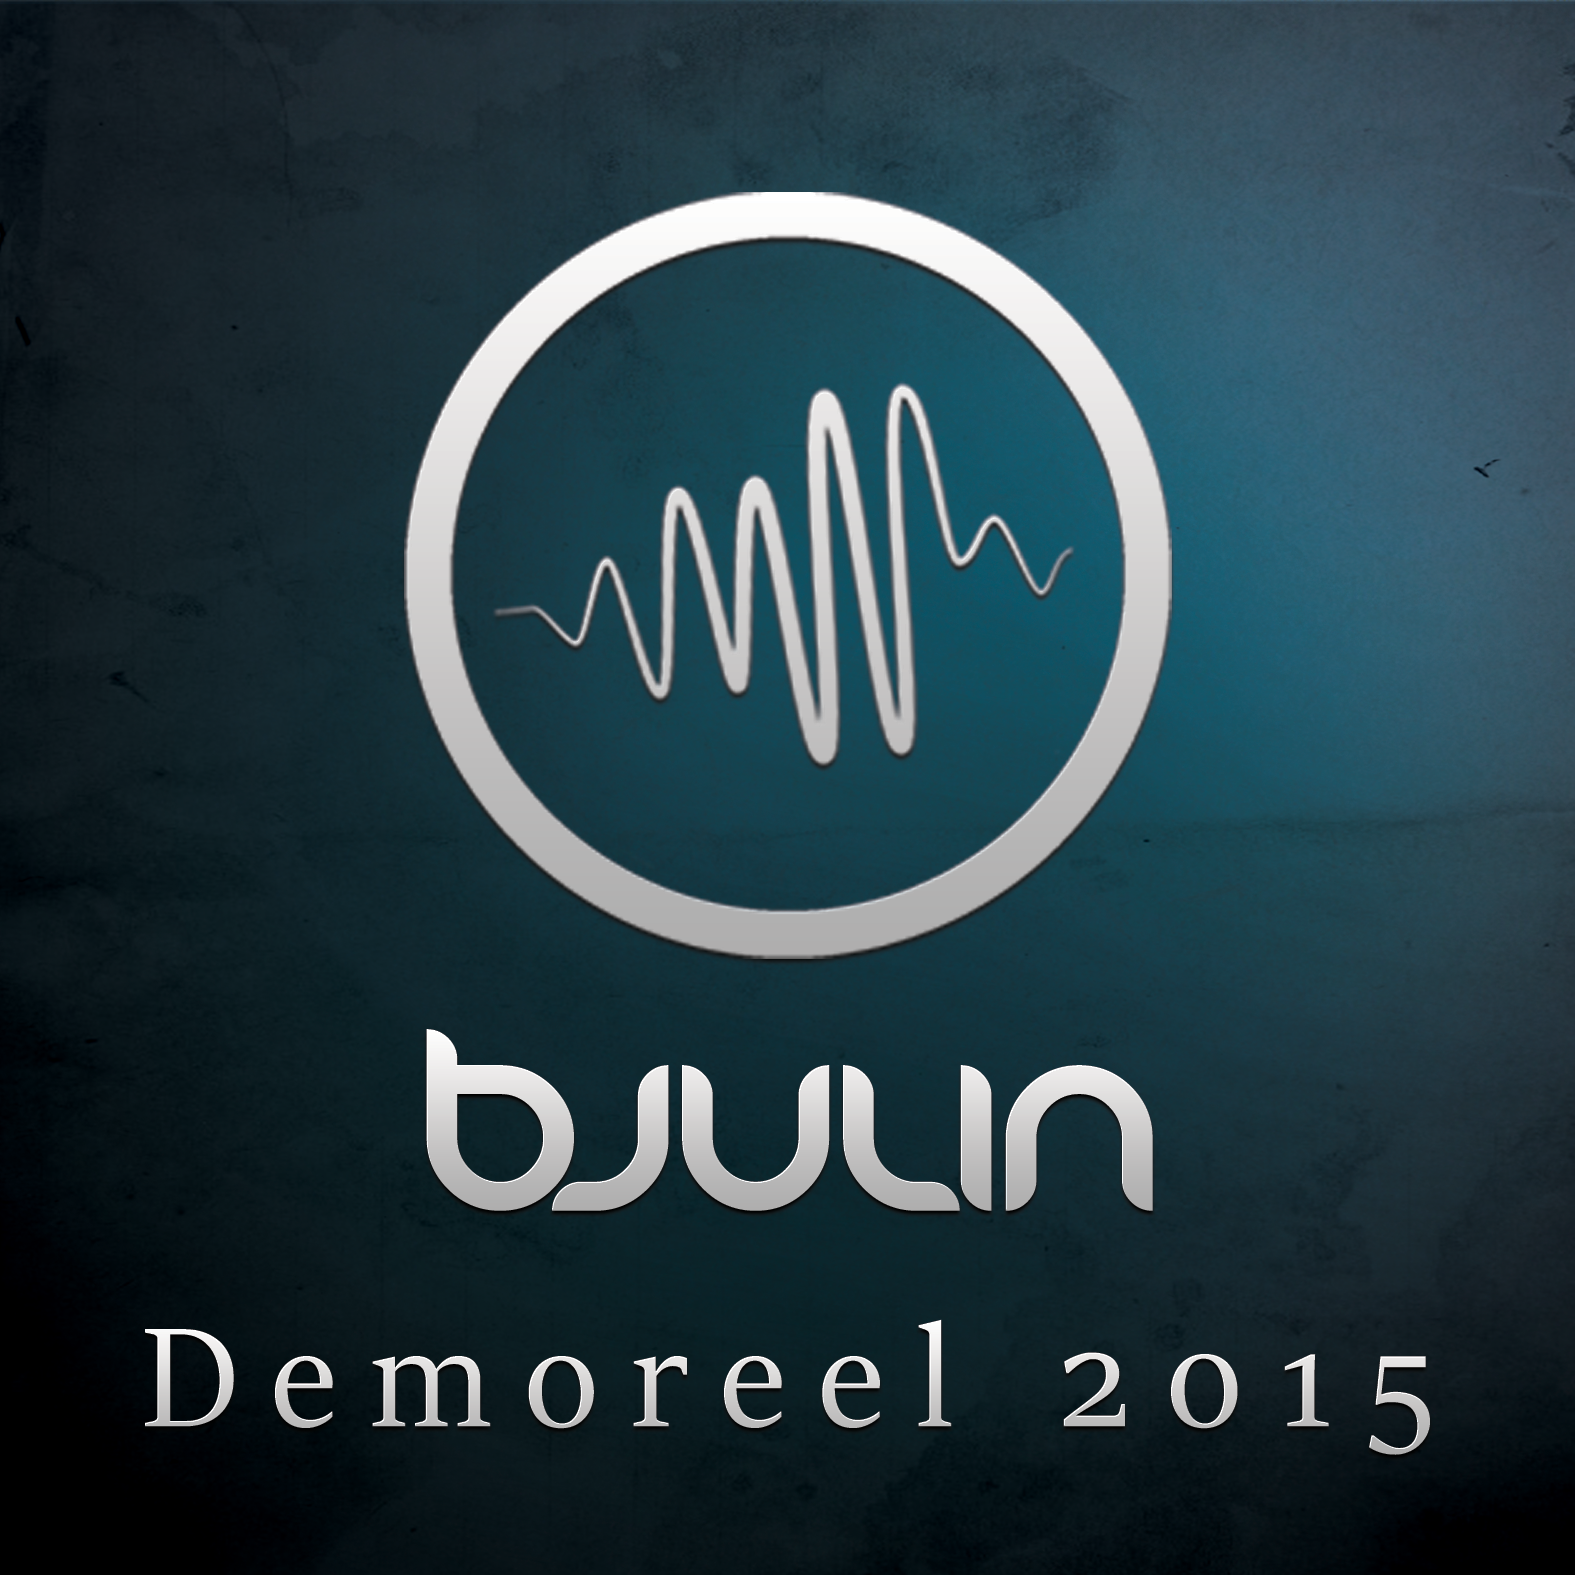 Demoreel 2015